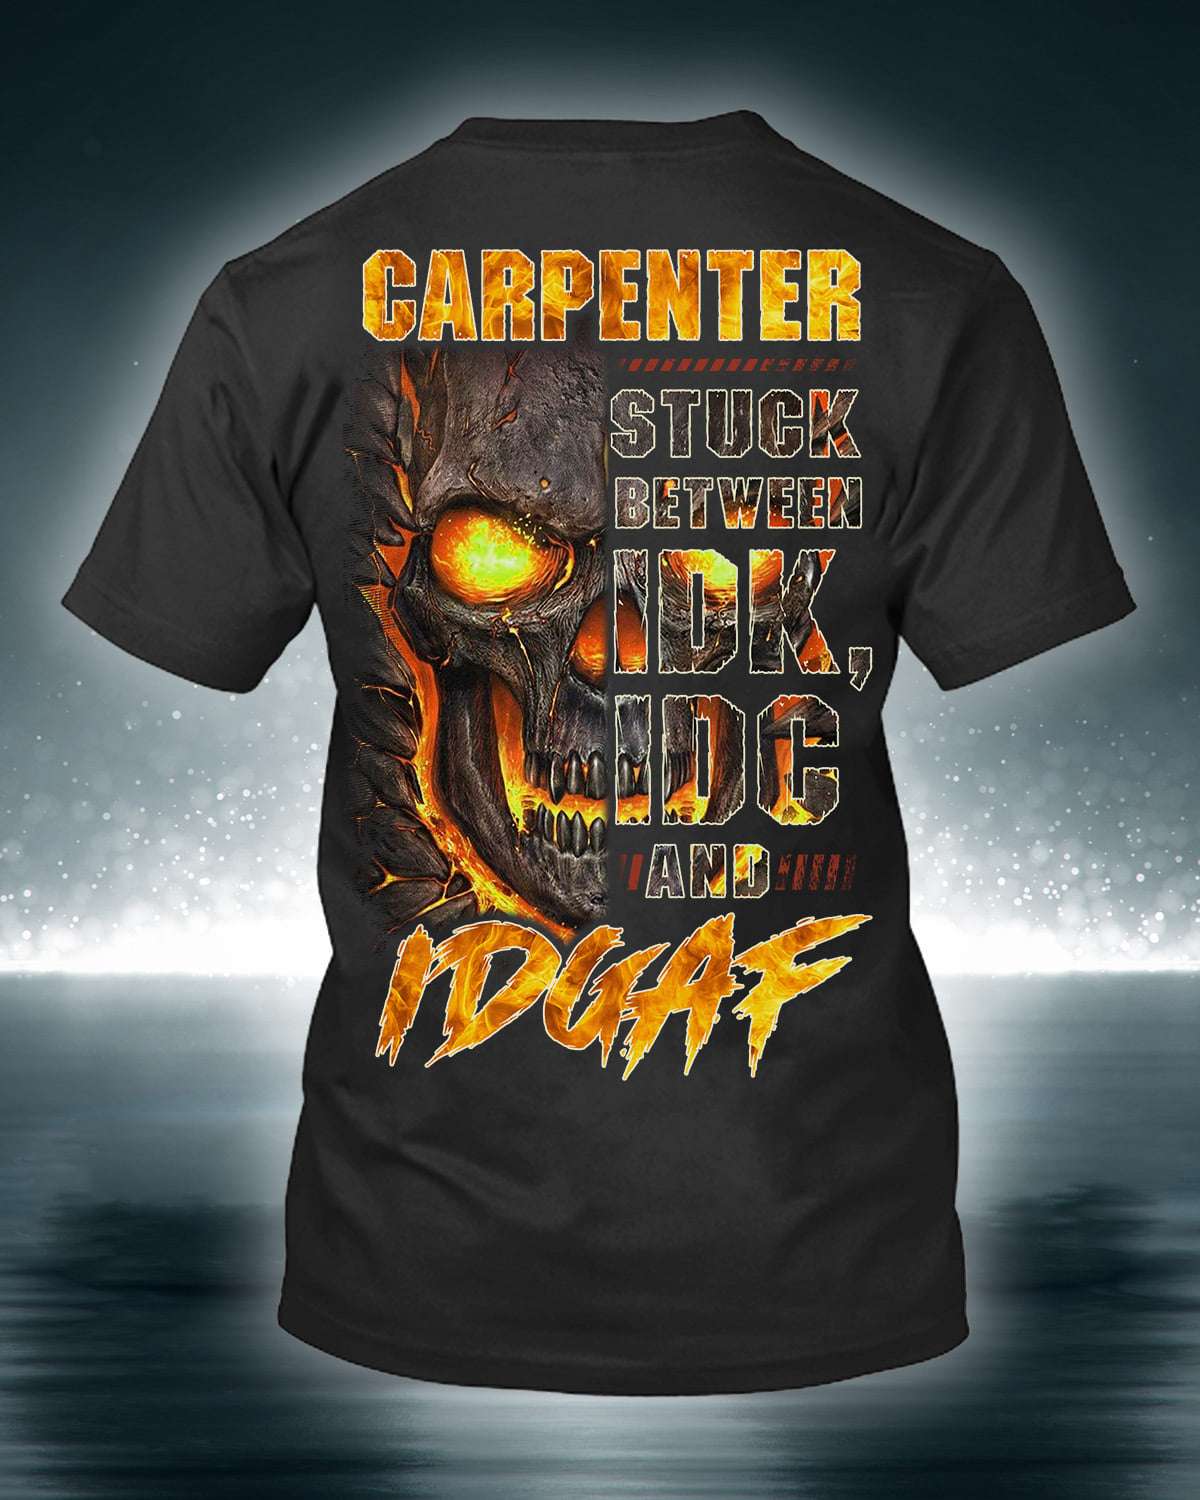 Carpenter stuck between IDK, IDC and IDGAF - Flame evil